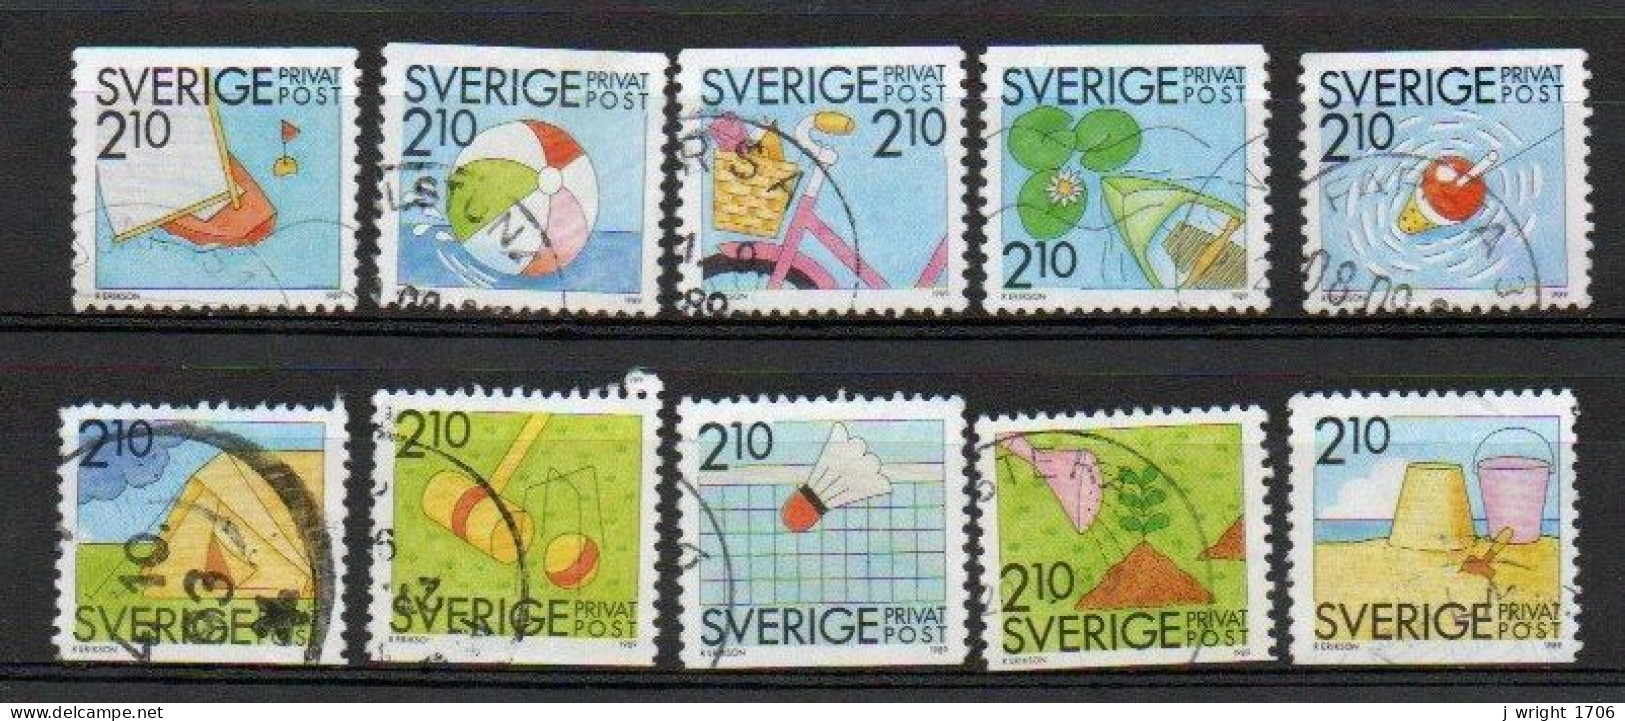 Sweden, 1989, Redate Stamps/Summer Activities, Set, USED - Gebraucht